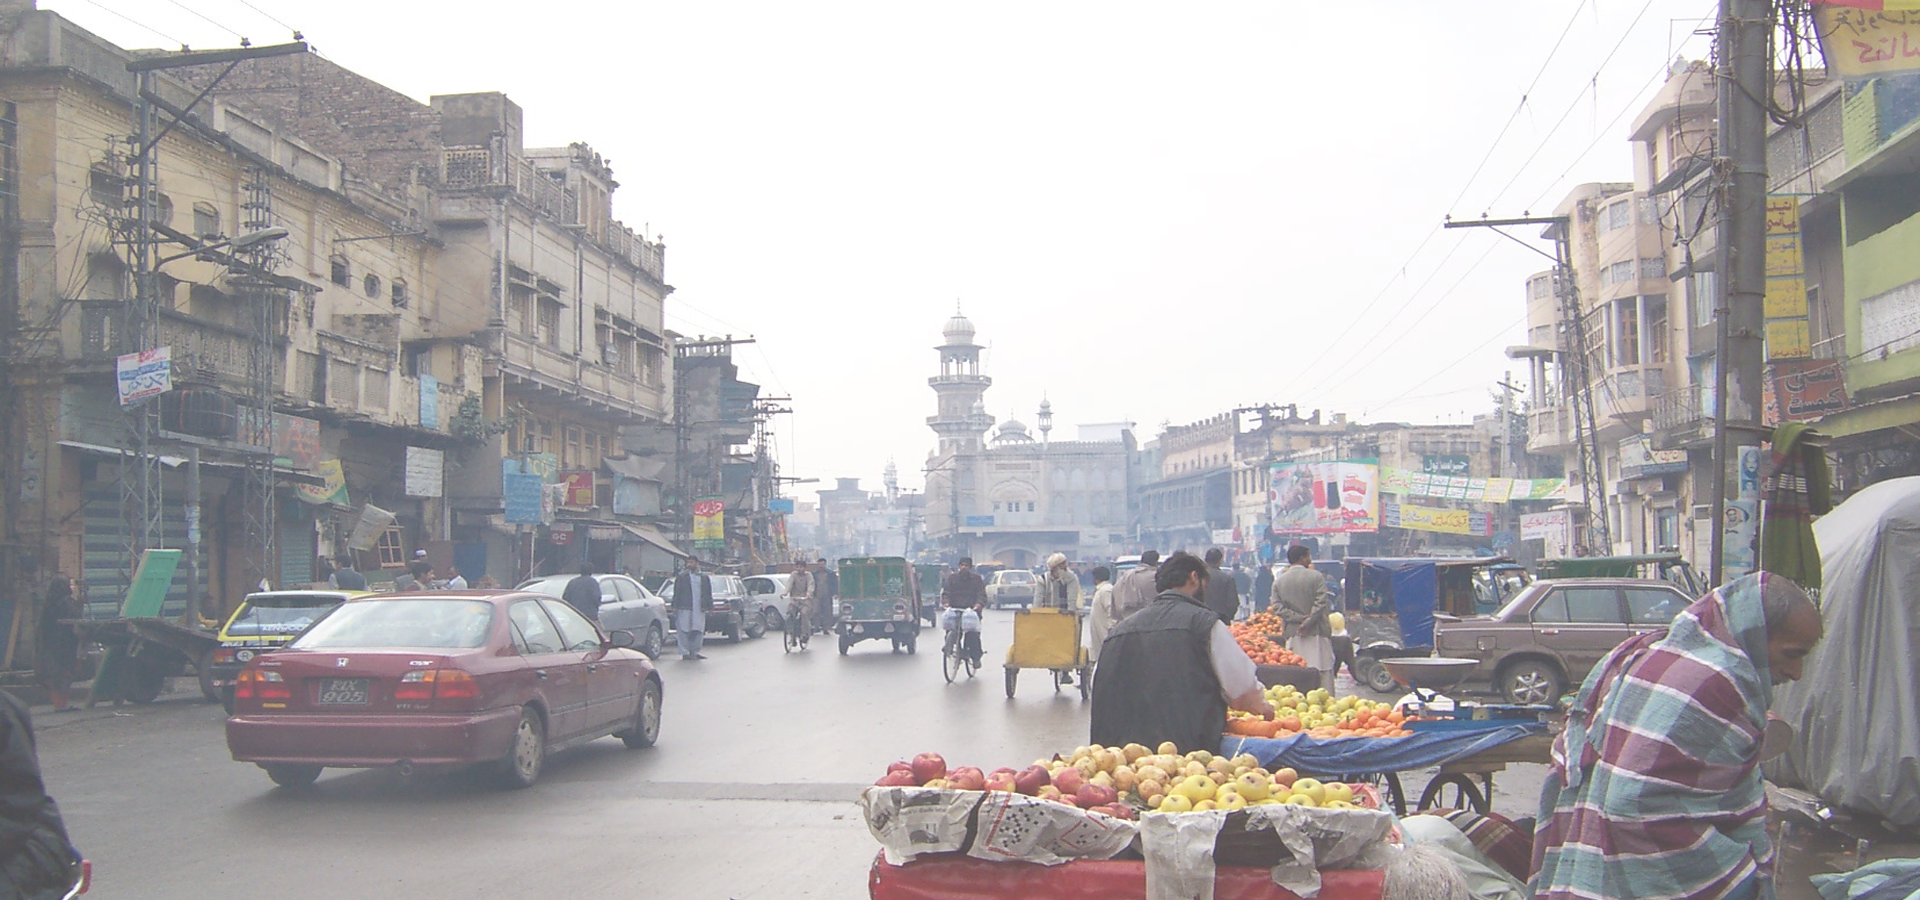 <b>Rawalpindi, Punjab Province, Pakistan</b>